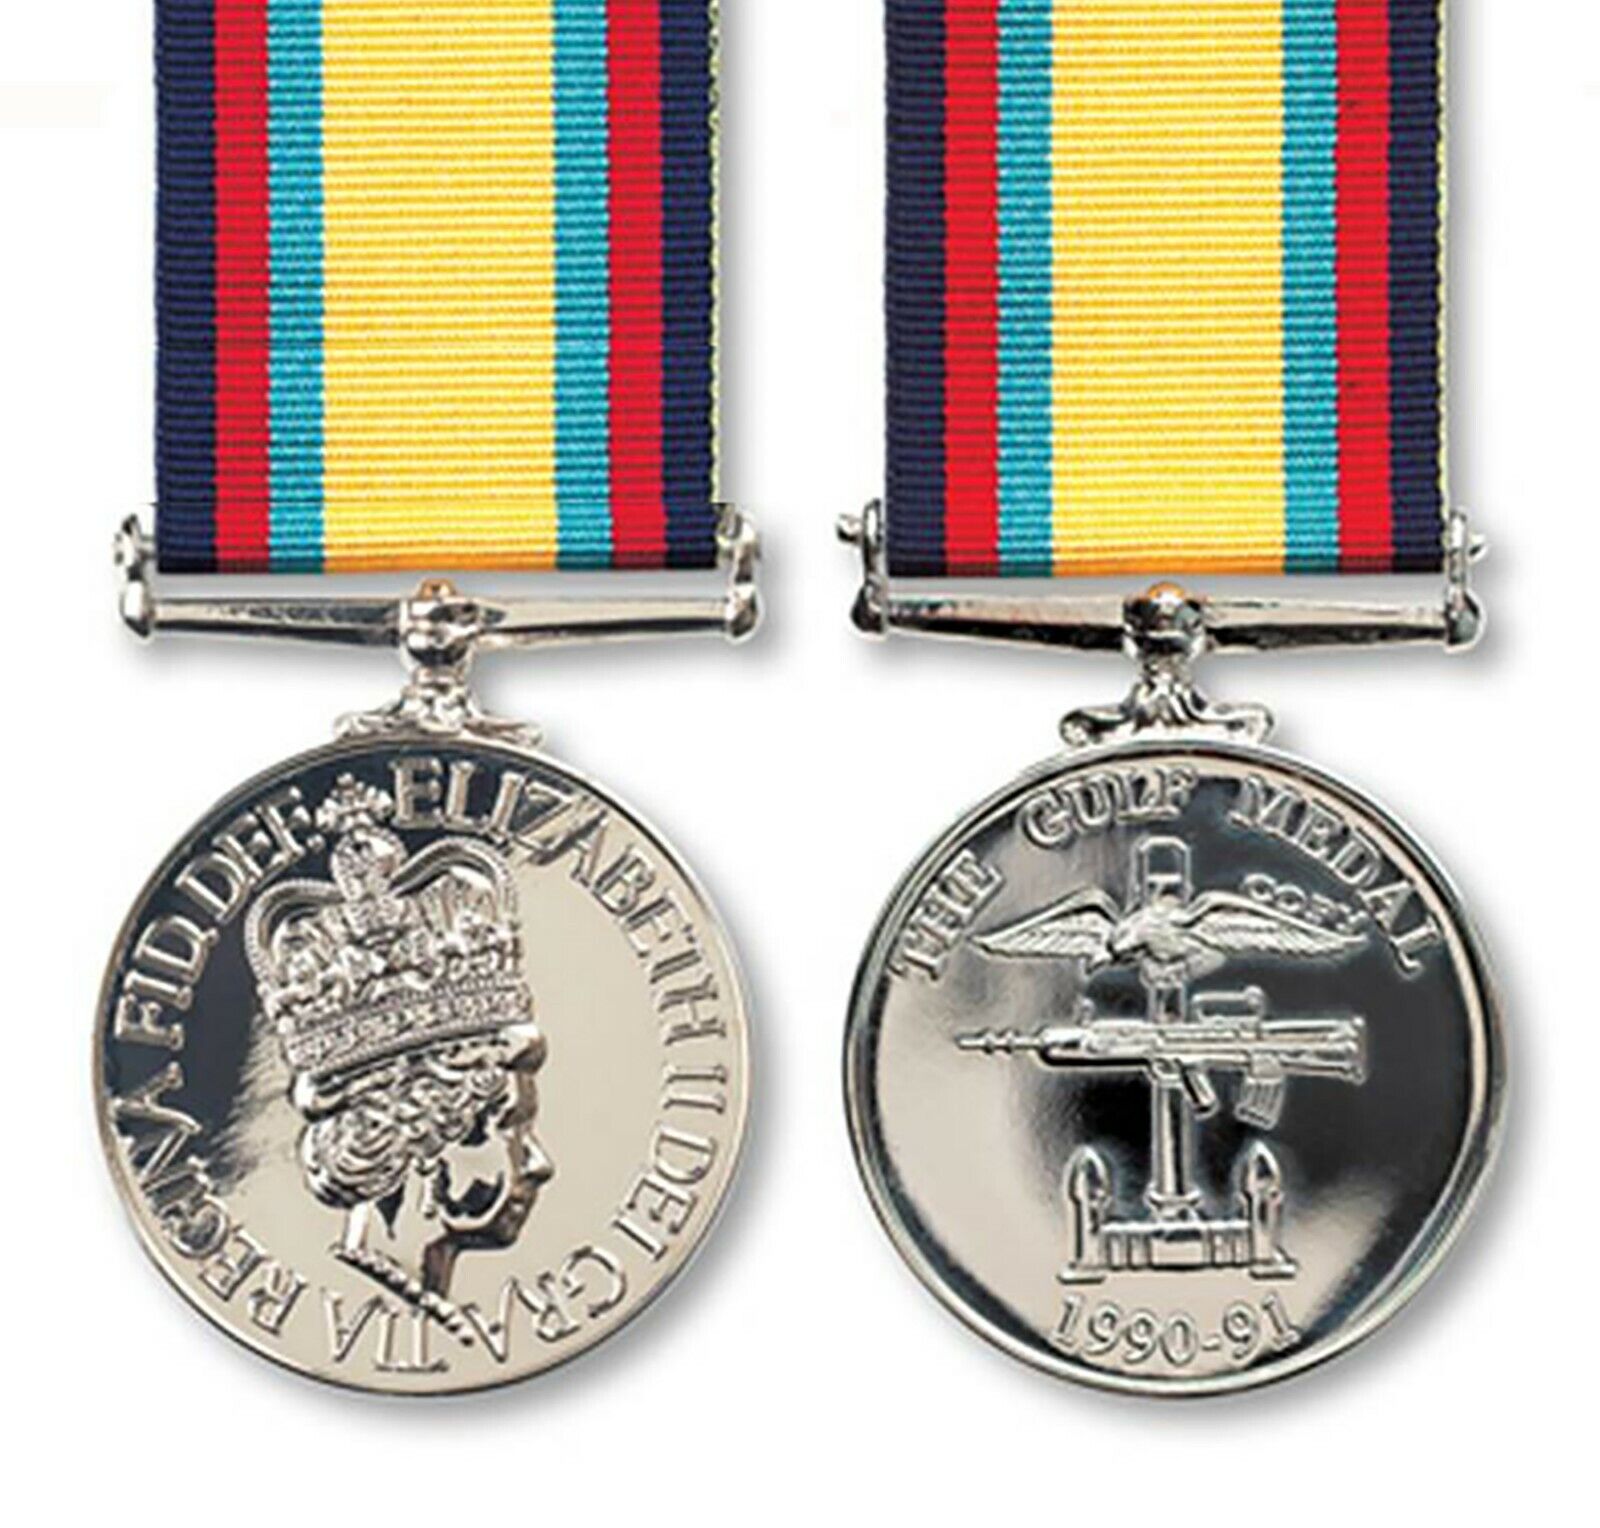 Official The Gulf Medal (1990-91) Miniature Medal + Ribbon - Iraq / Gulf War 1 